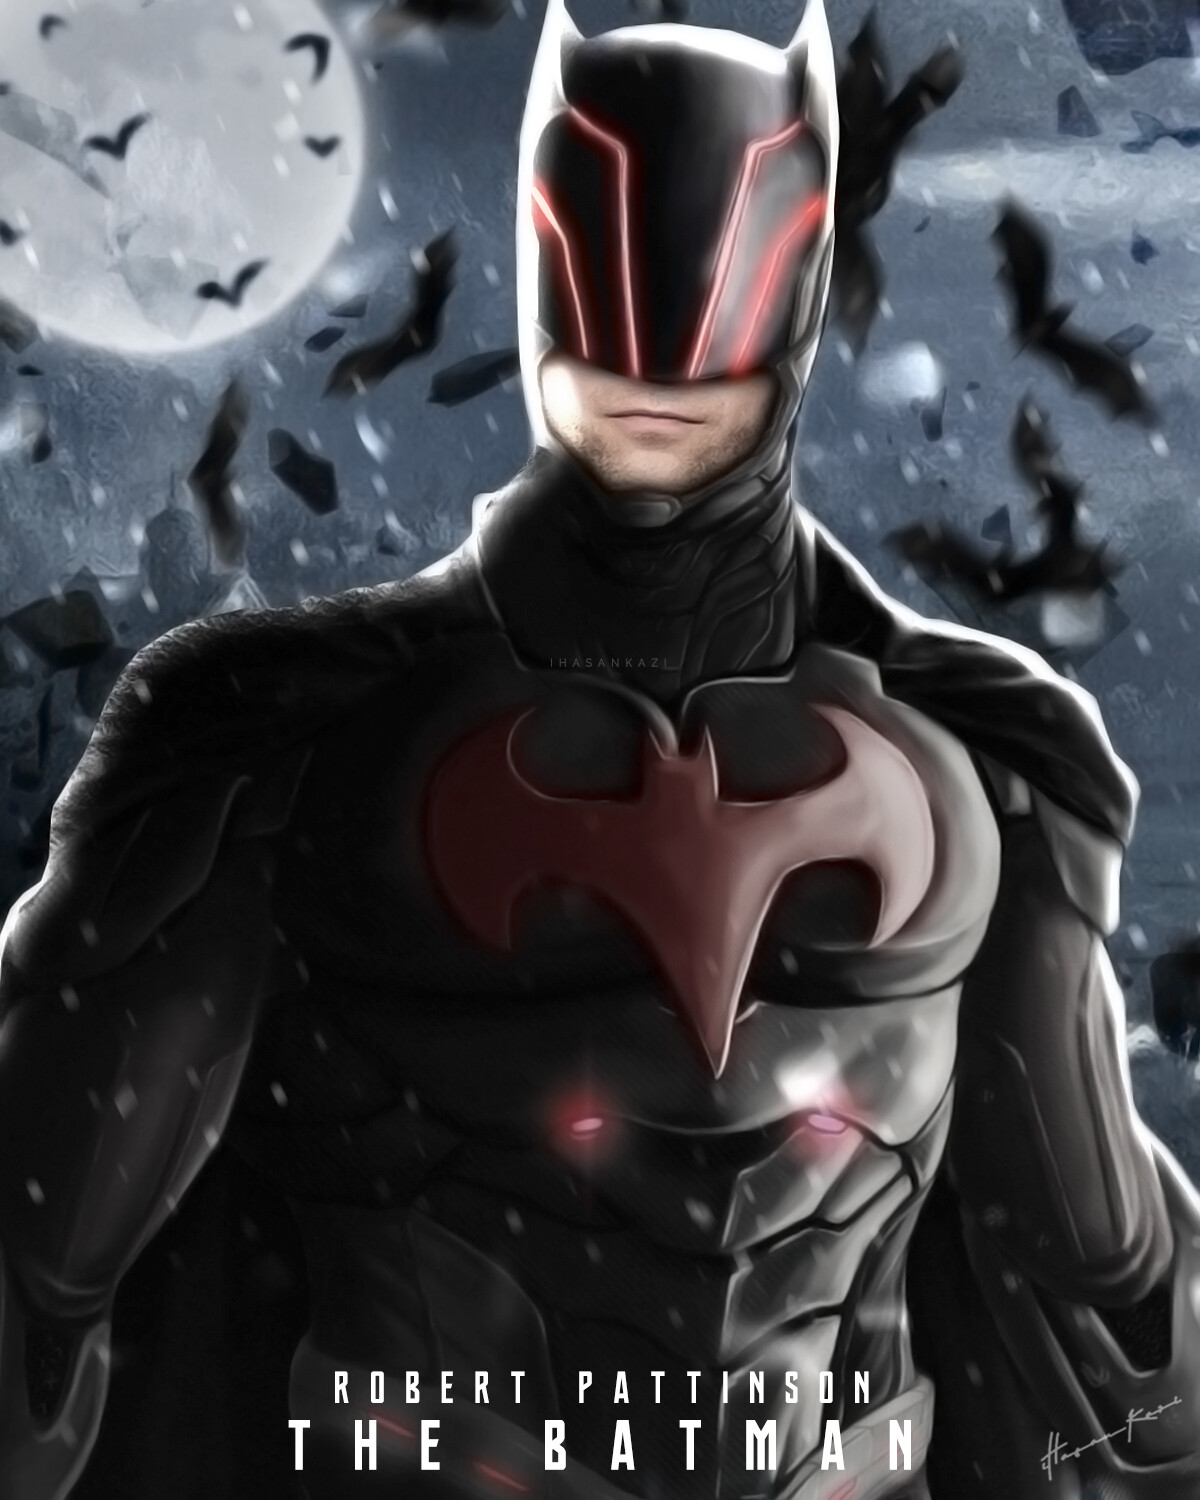 Hasan Kazi - Batman from the future